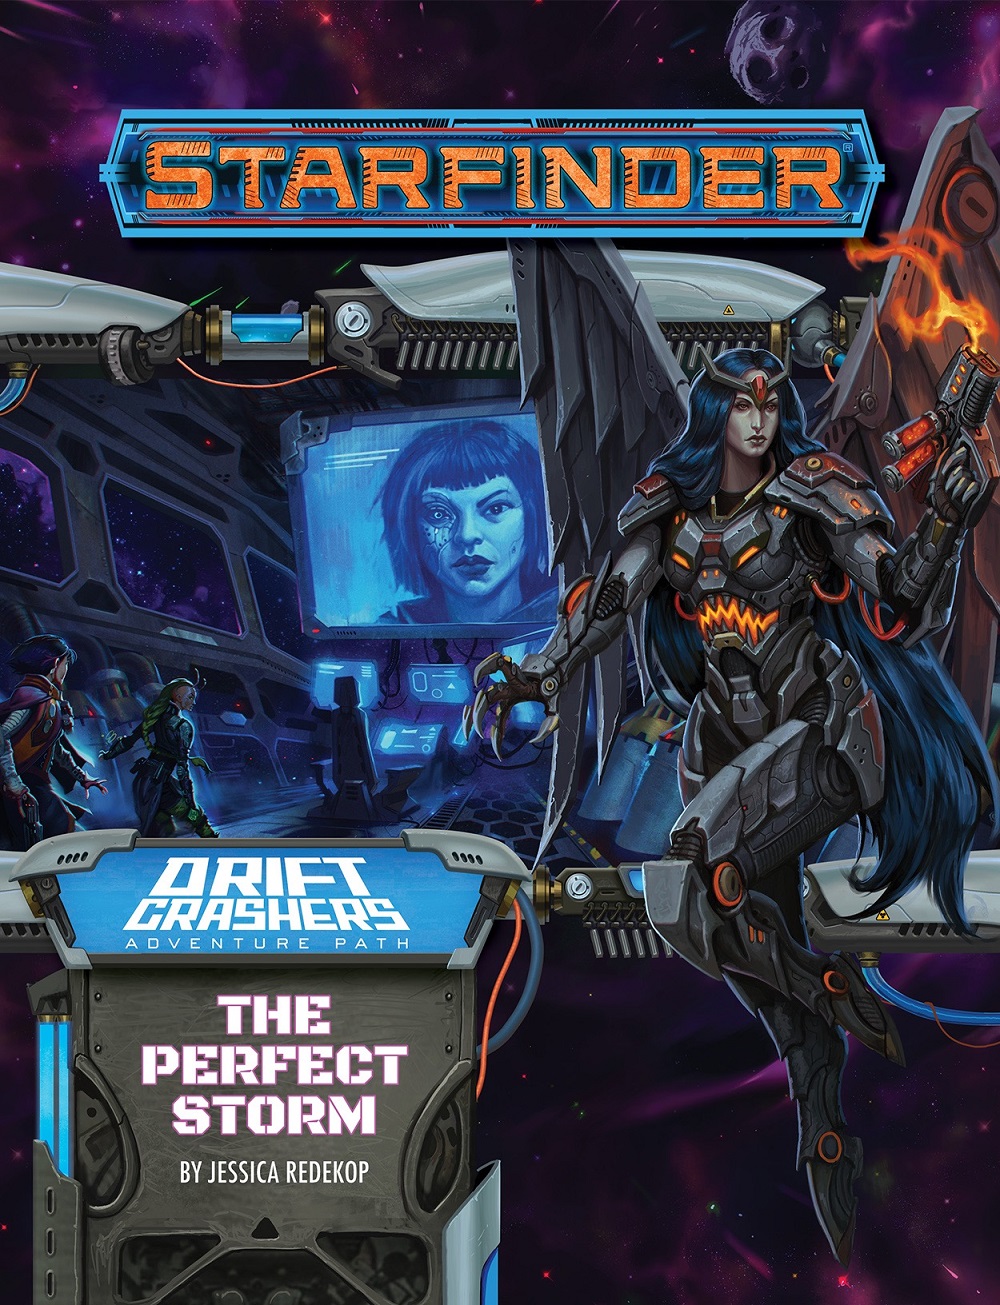 Starfinder Adventure Path: Drift Crashers 1 - The Perfect Storm 